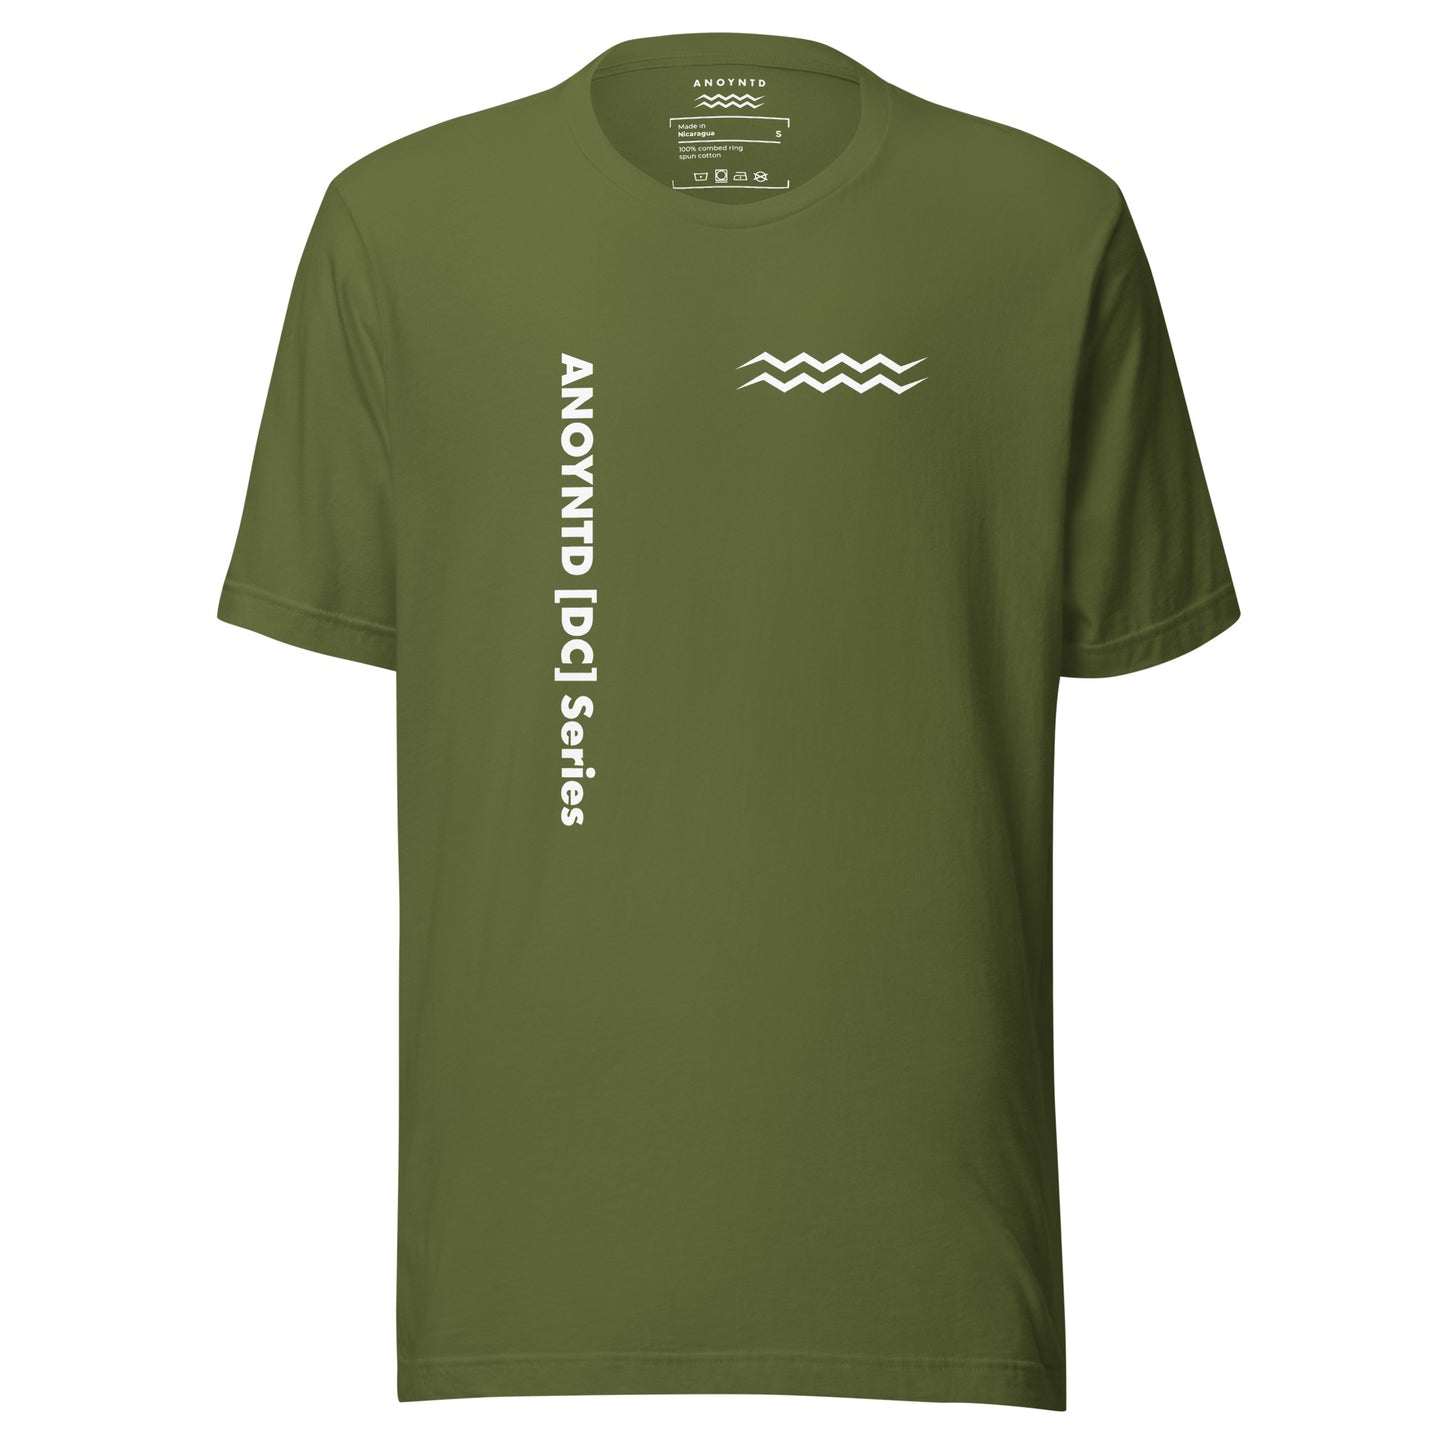 ANOYNTD [DC] Series Unisex t-shirt